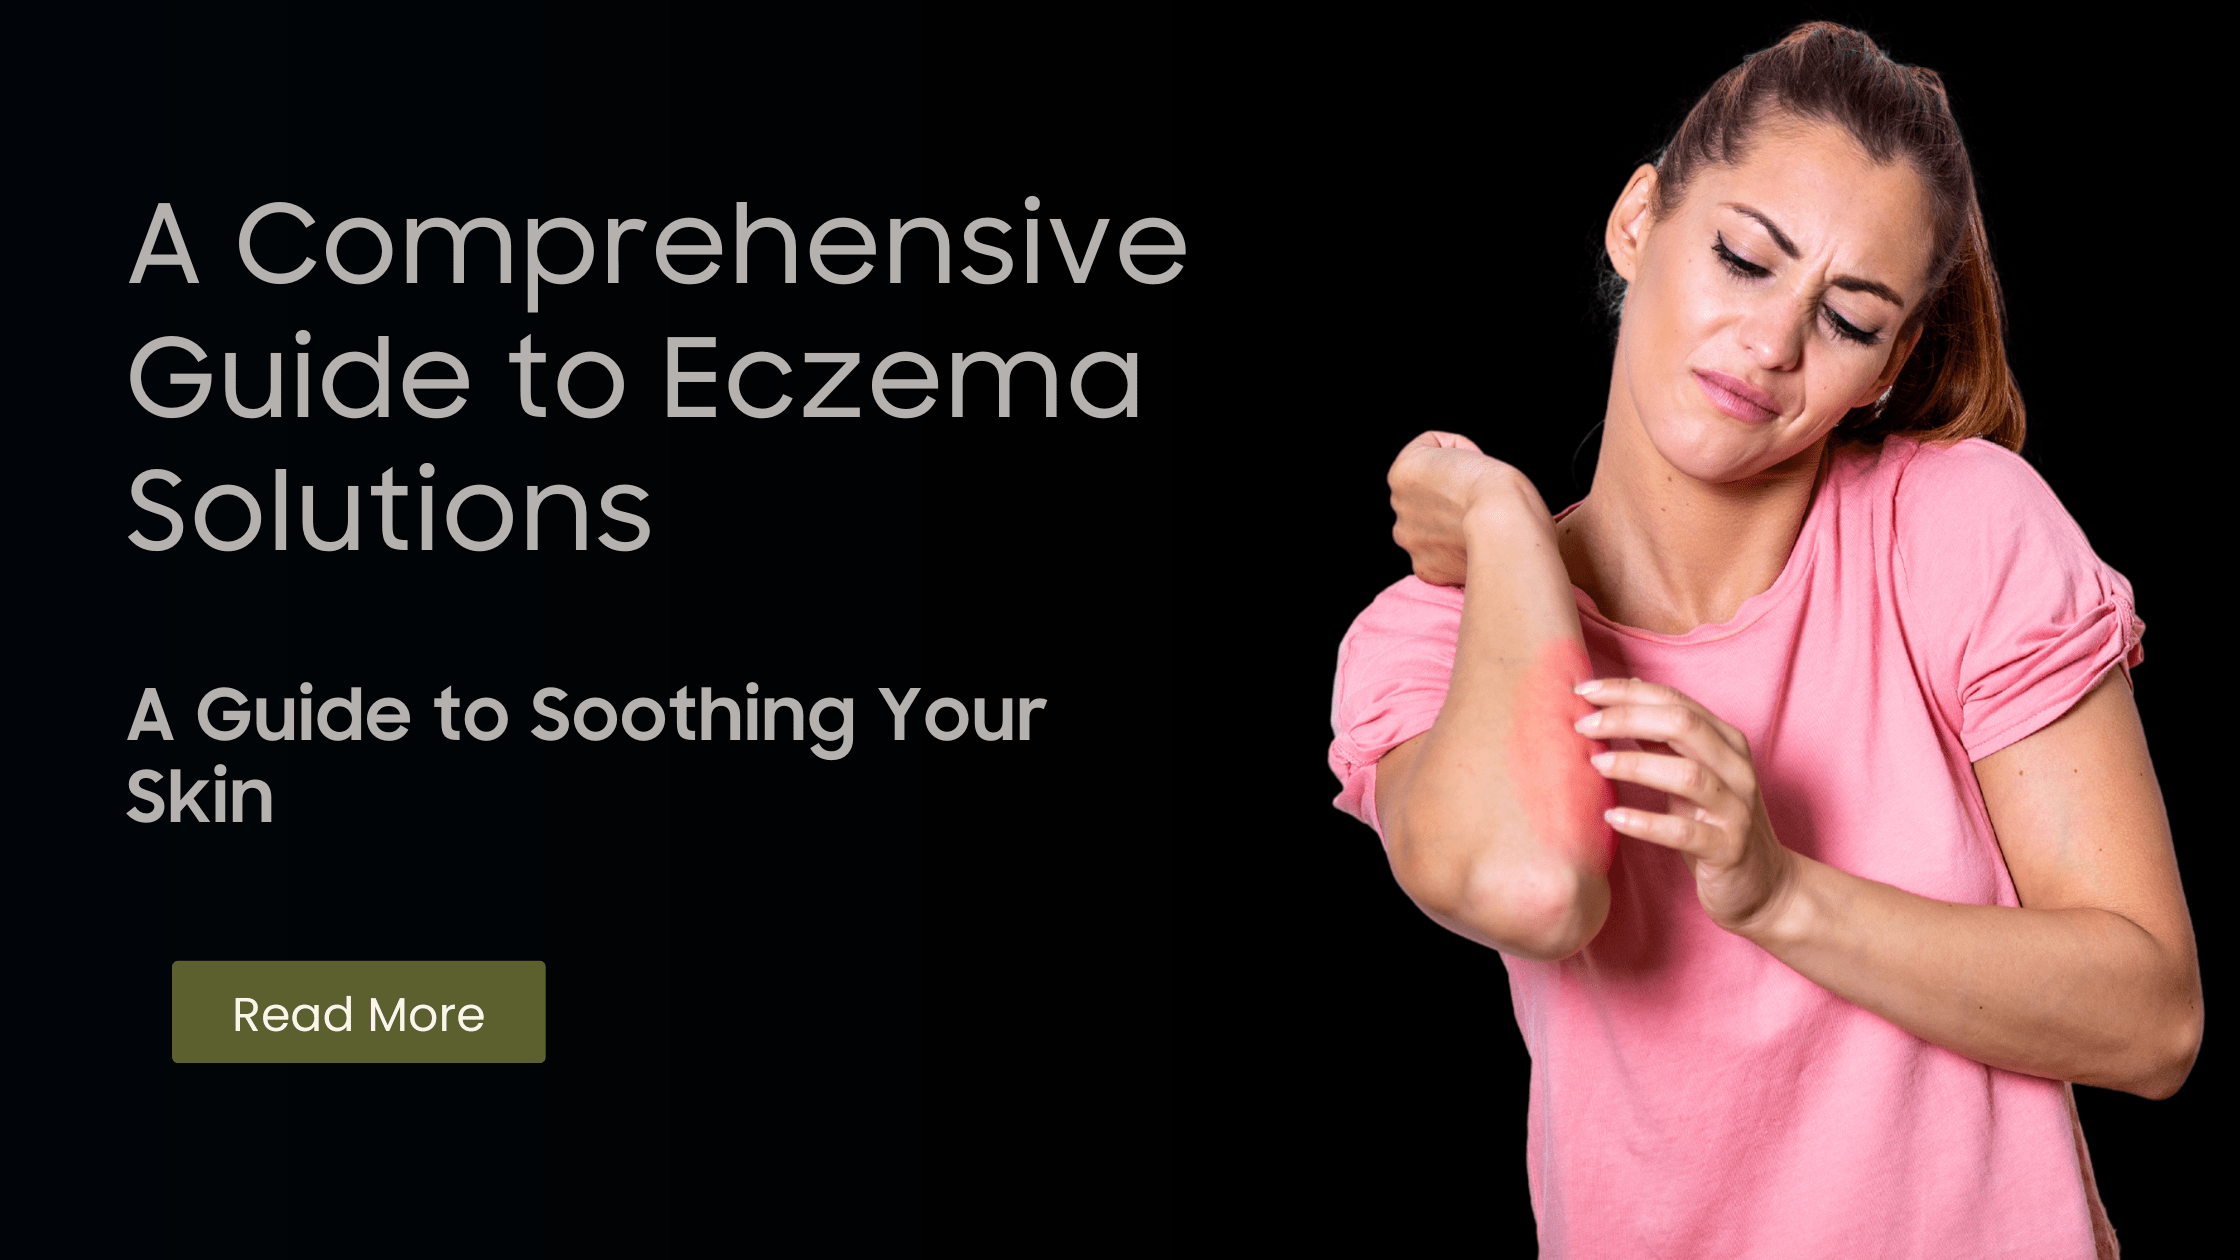 Eczema solutions